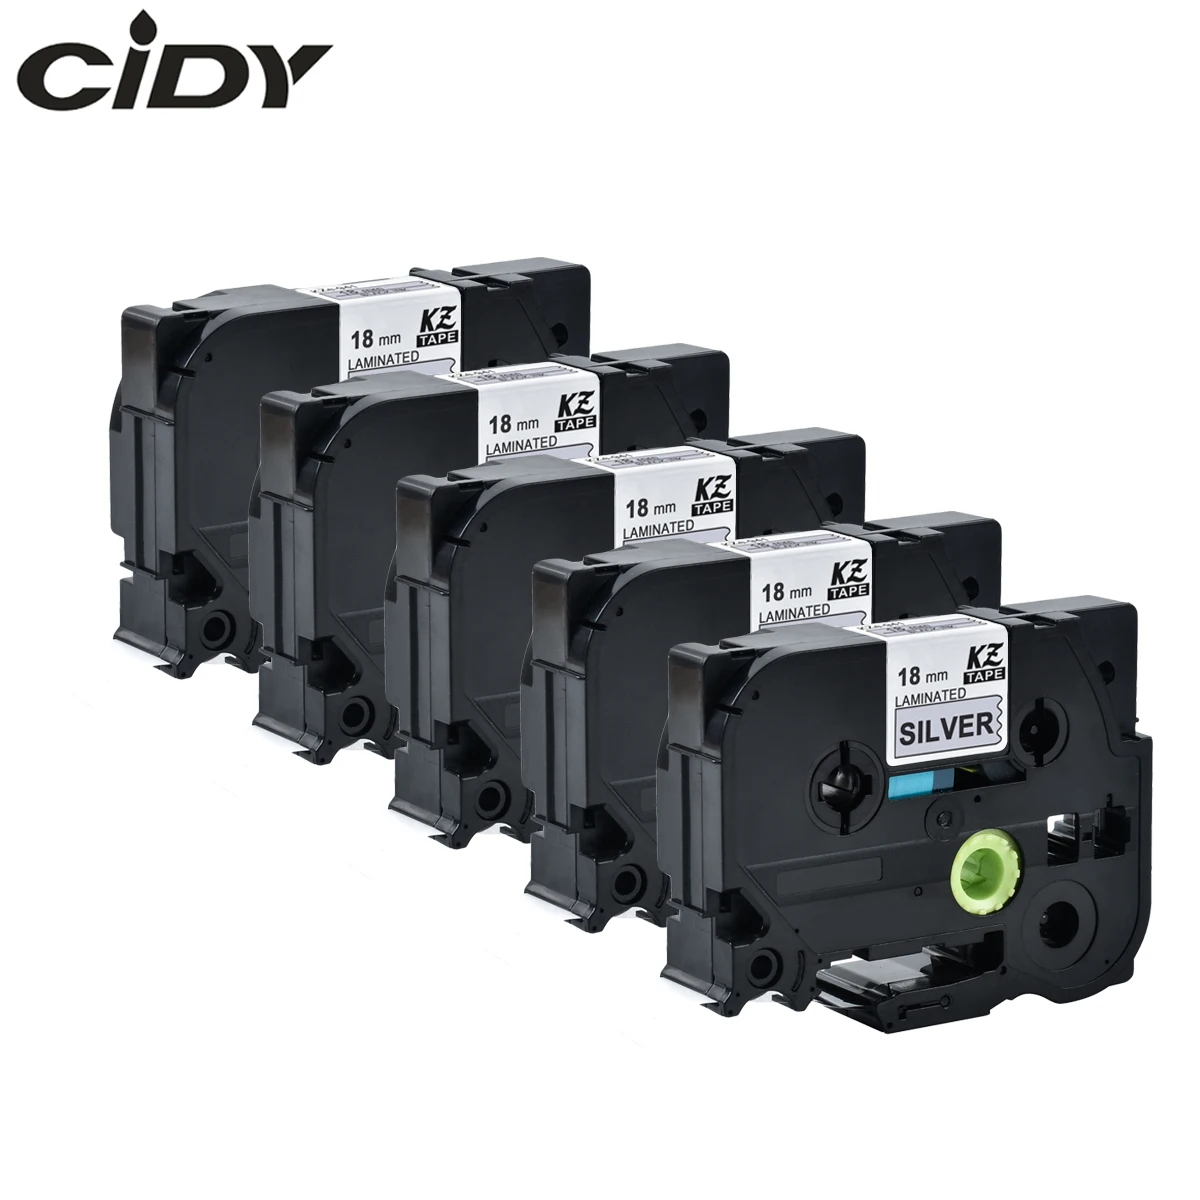 

cidy 5PCS compatible TZe-941 tz-941 tze 941 tz 941 Black on Silver 18mm laminated label tape for brother printer tz941 tze941